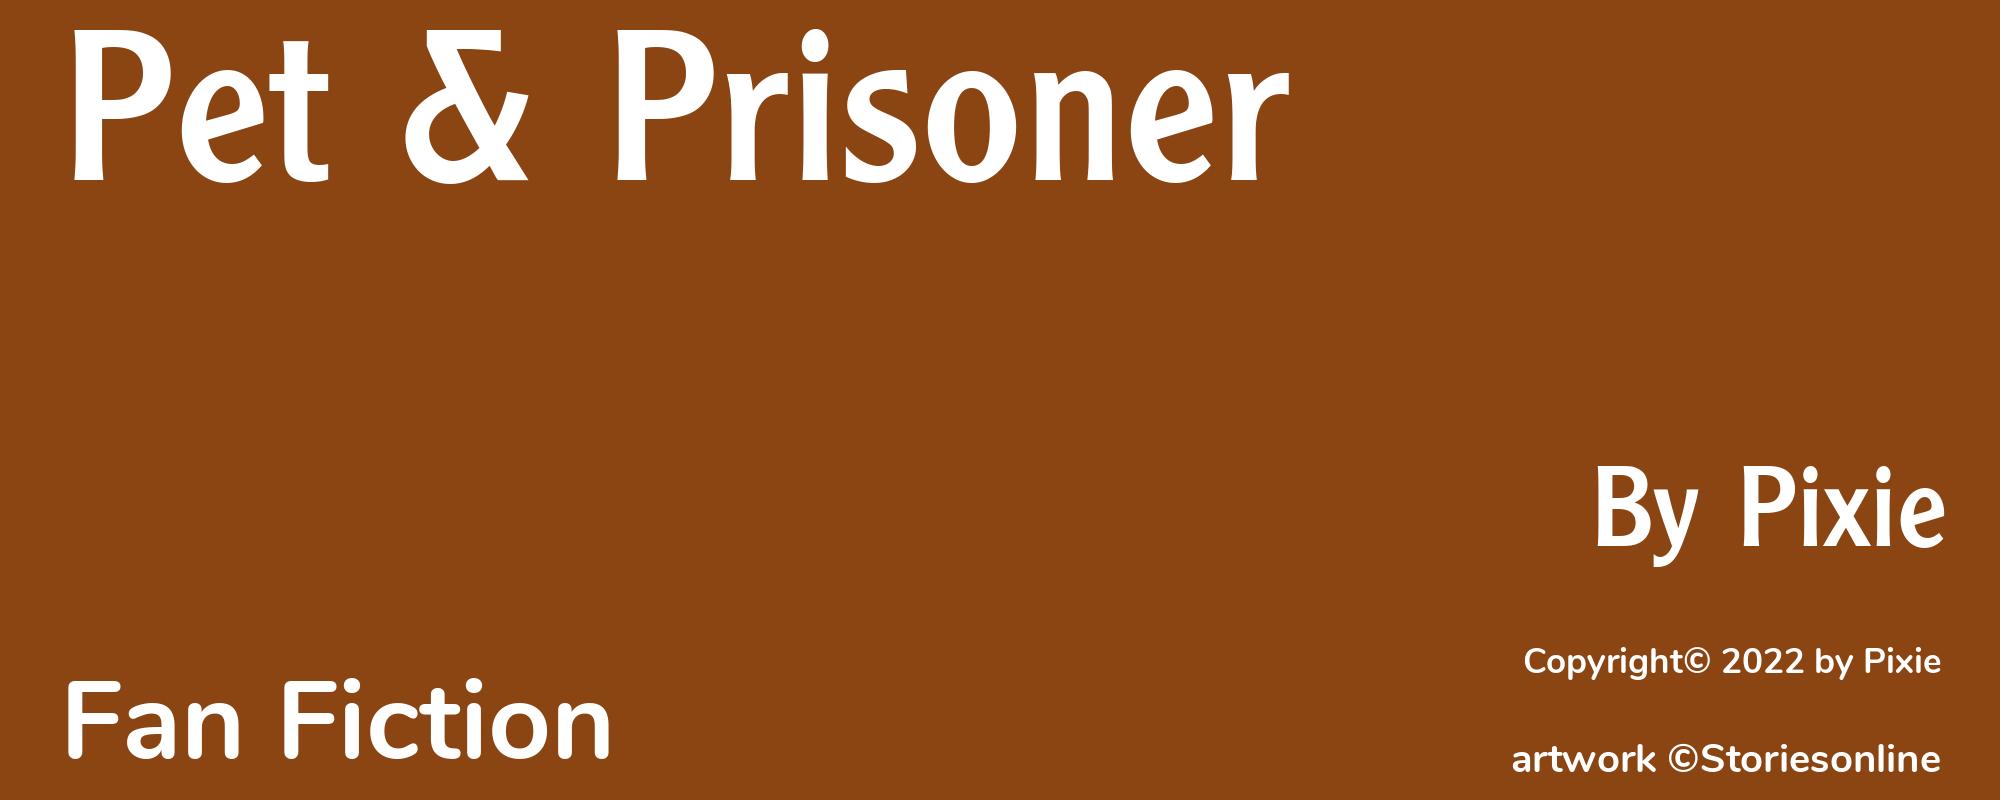 Pet & Prisoner - Cover